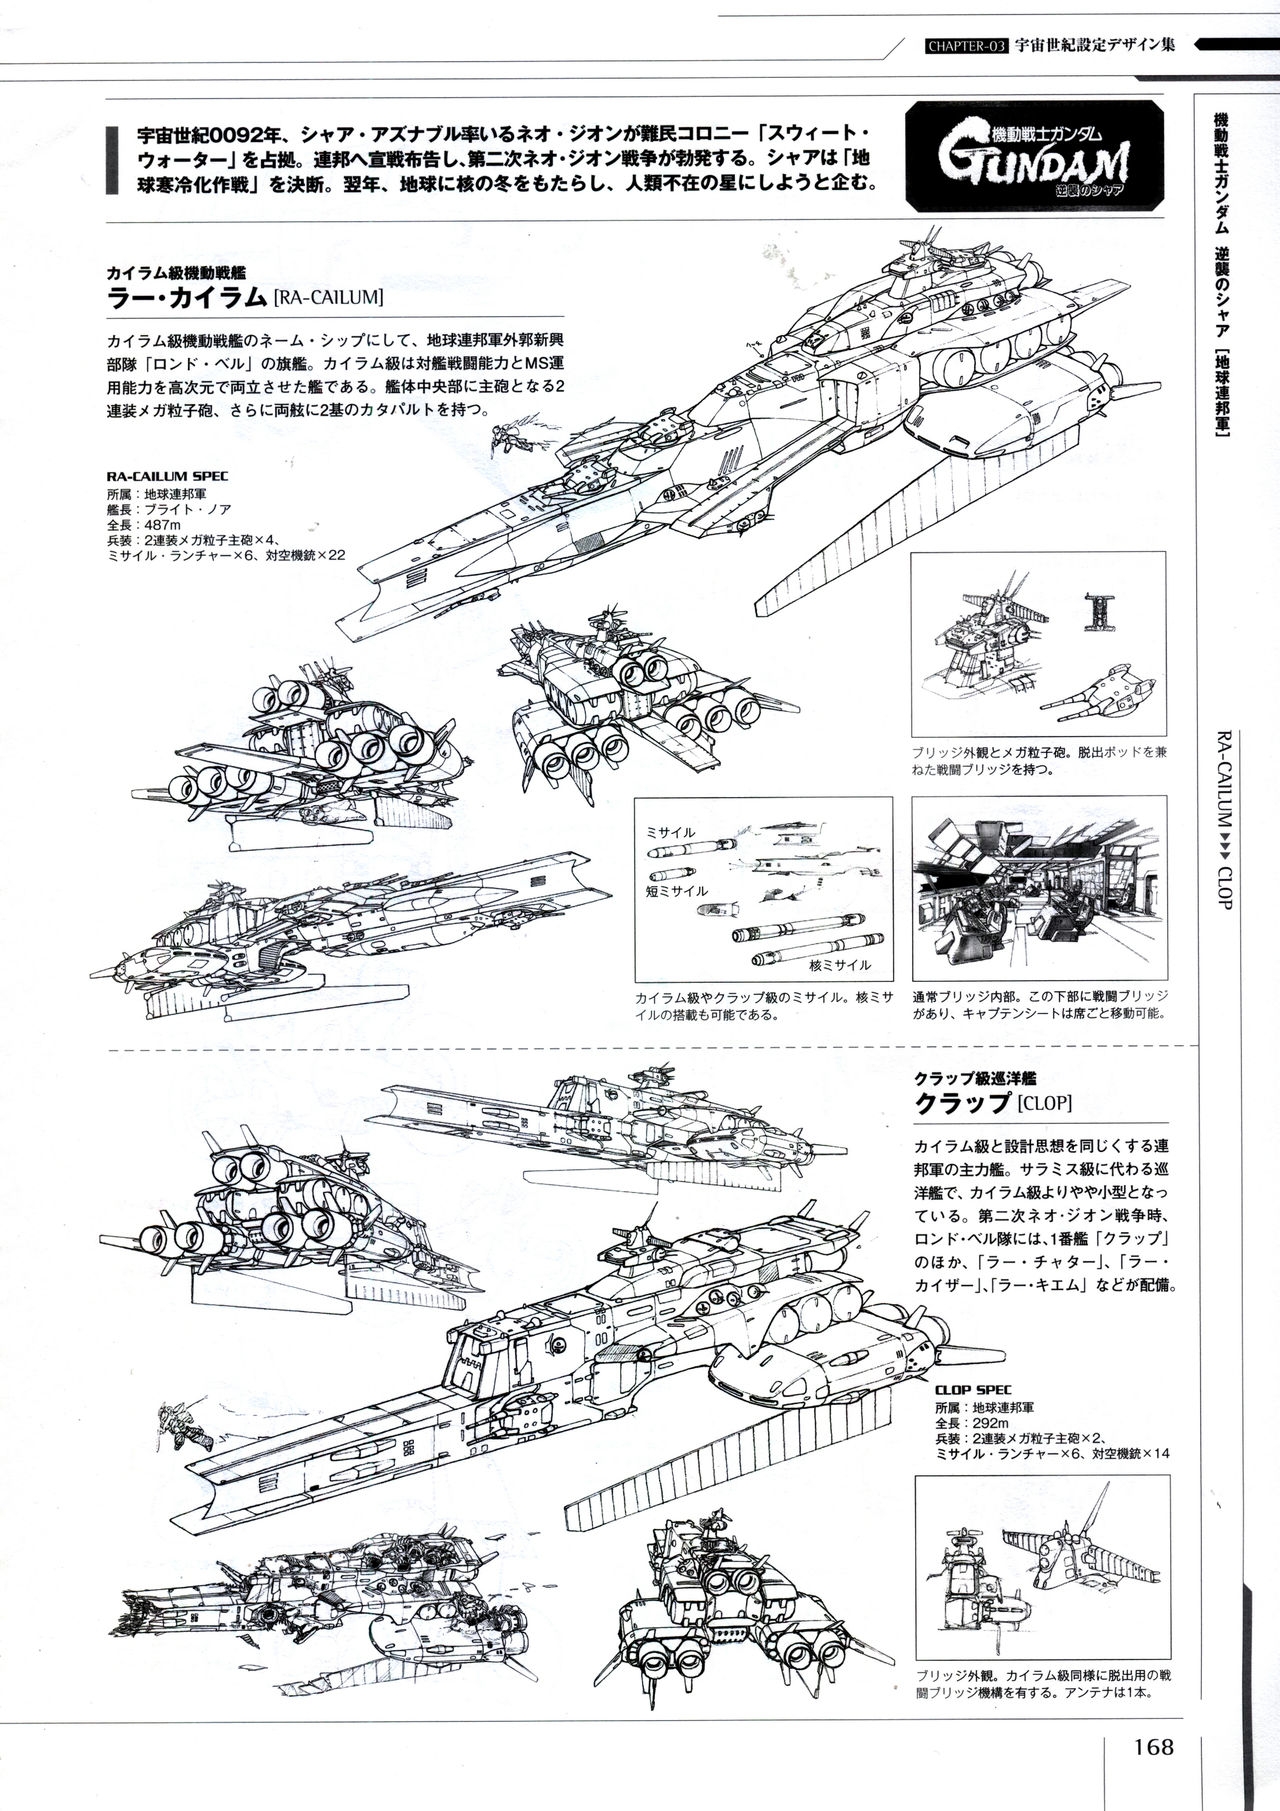 Mobile Suit Gundam - Ship & Aerospace Plane Encyclopedia - Revised Edition 173